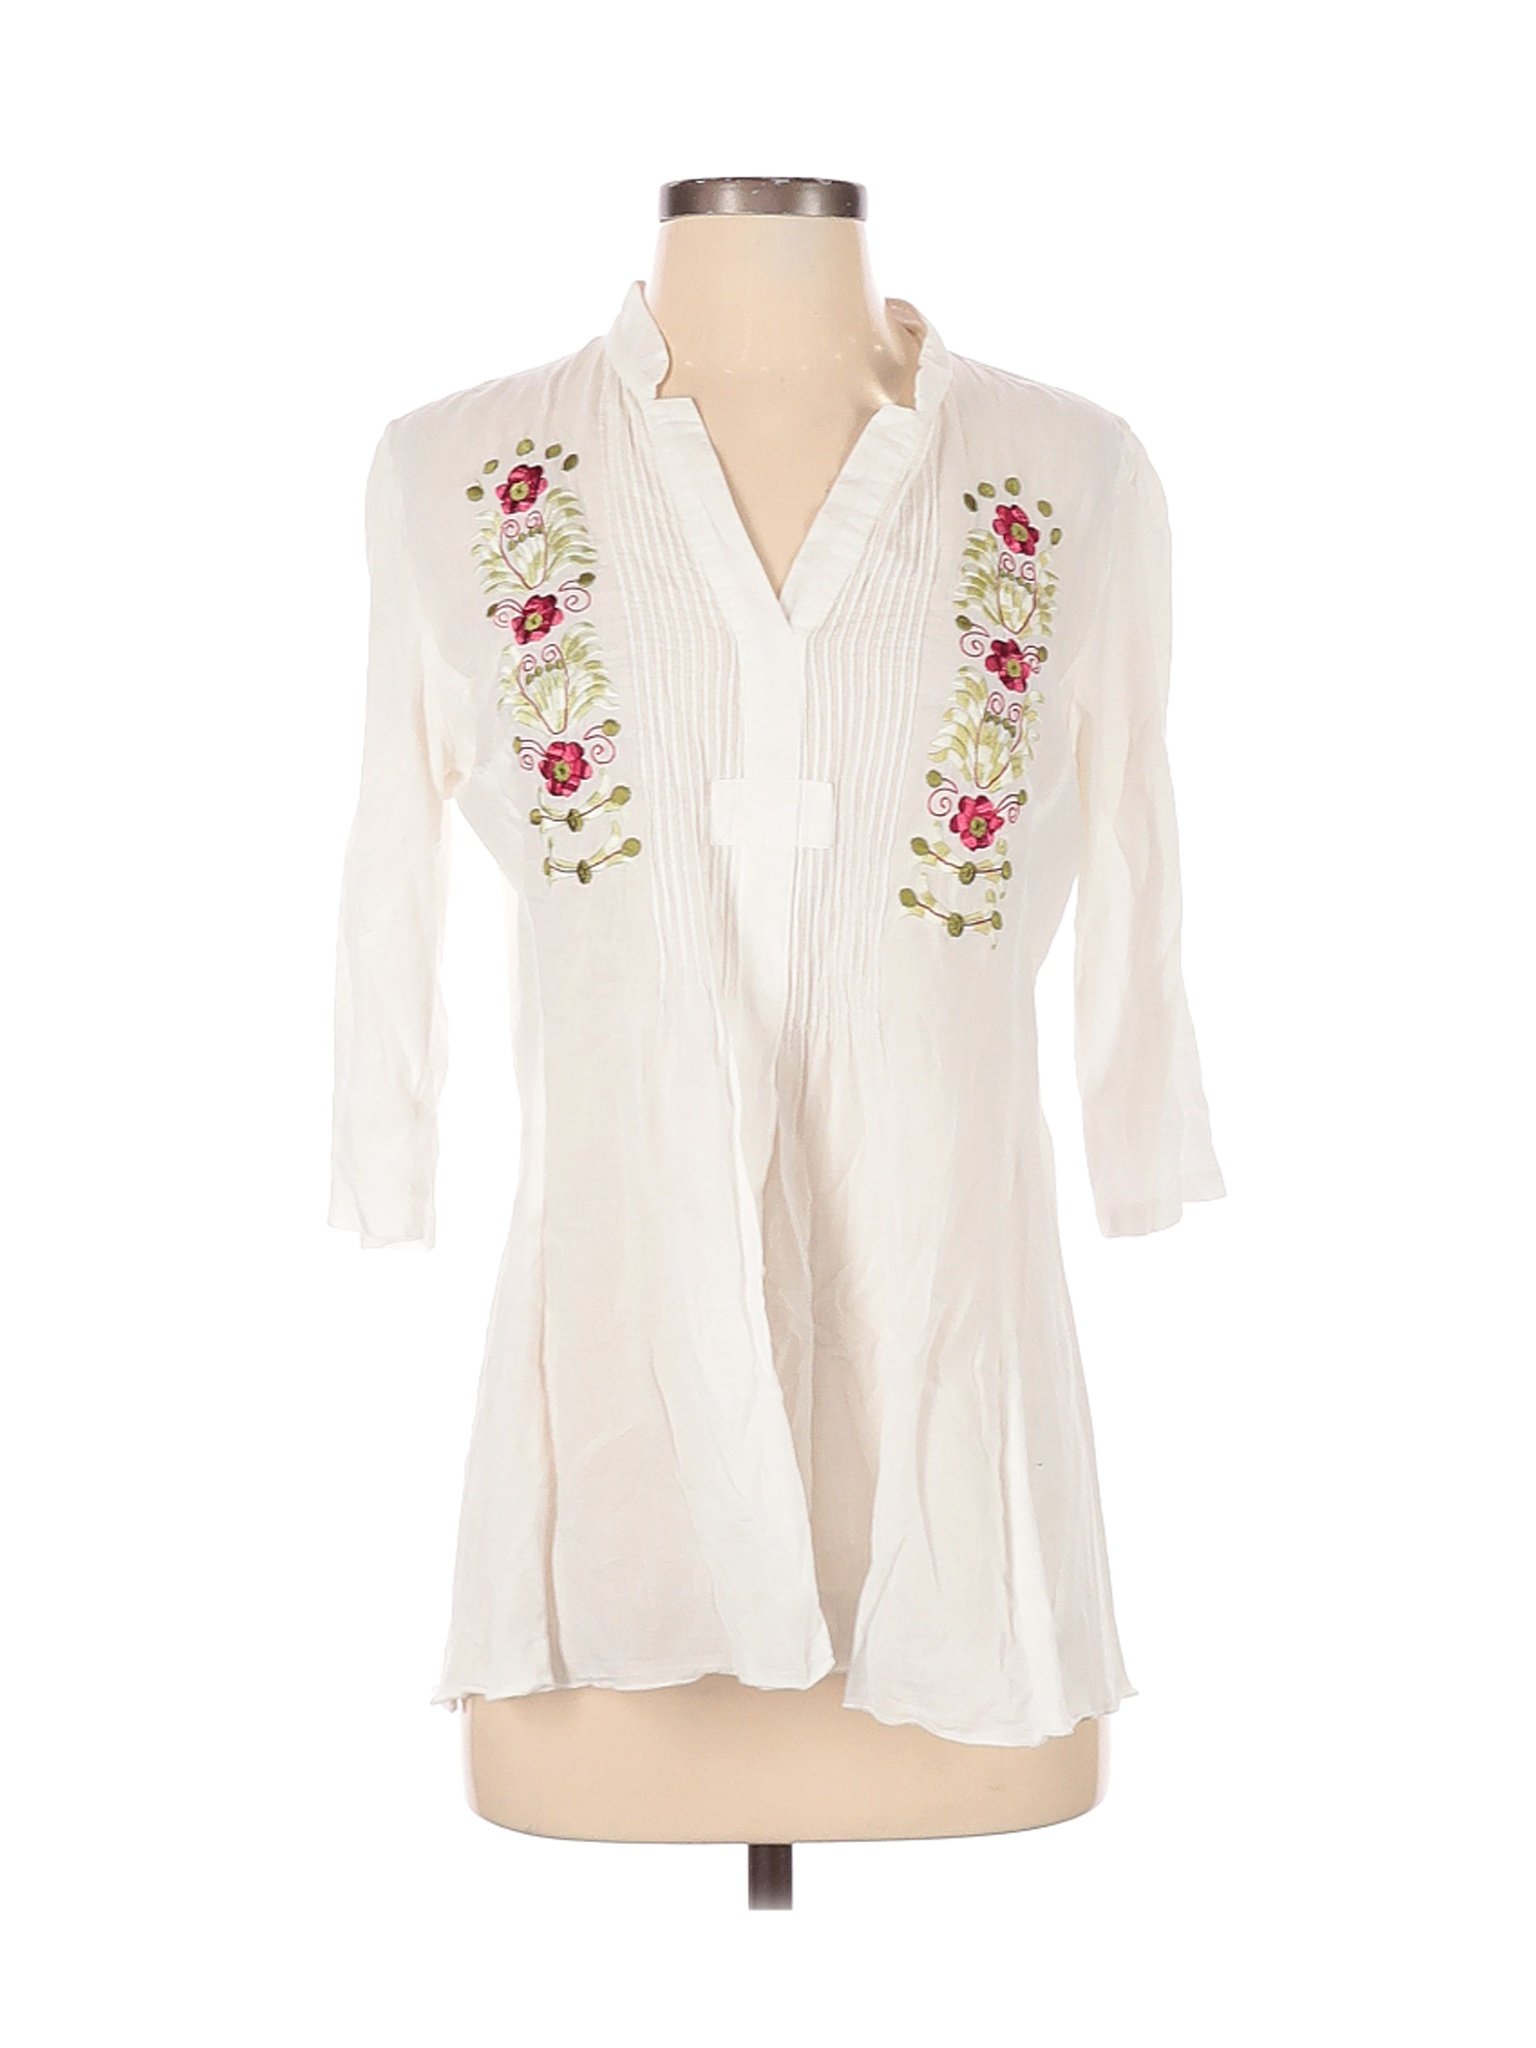 V Cristina Women Ivory 3/4 Sleeve Blouse S | eBay